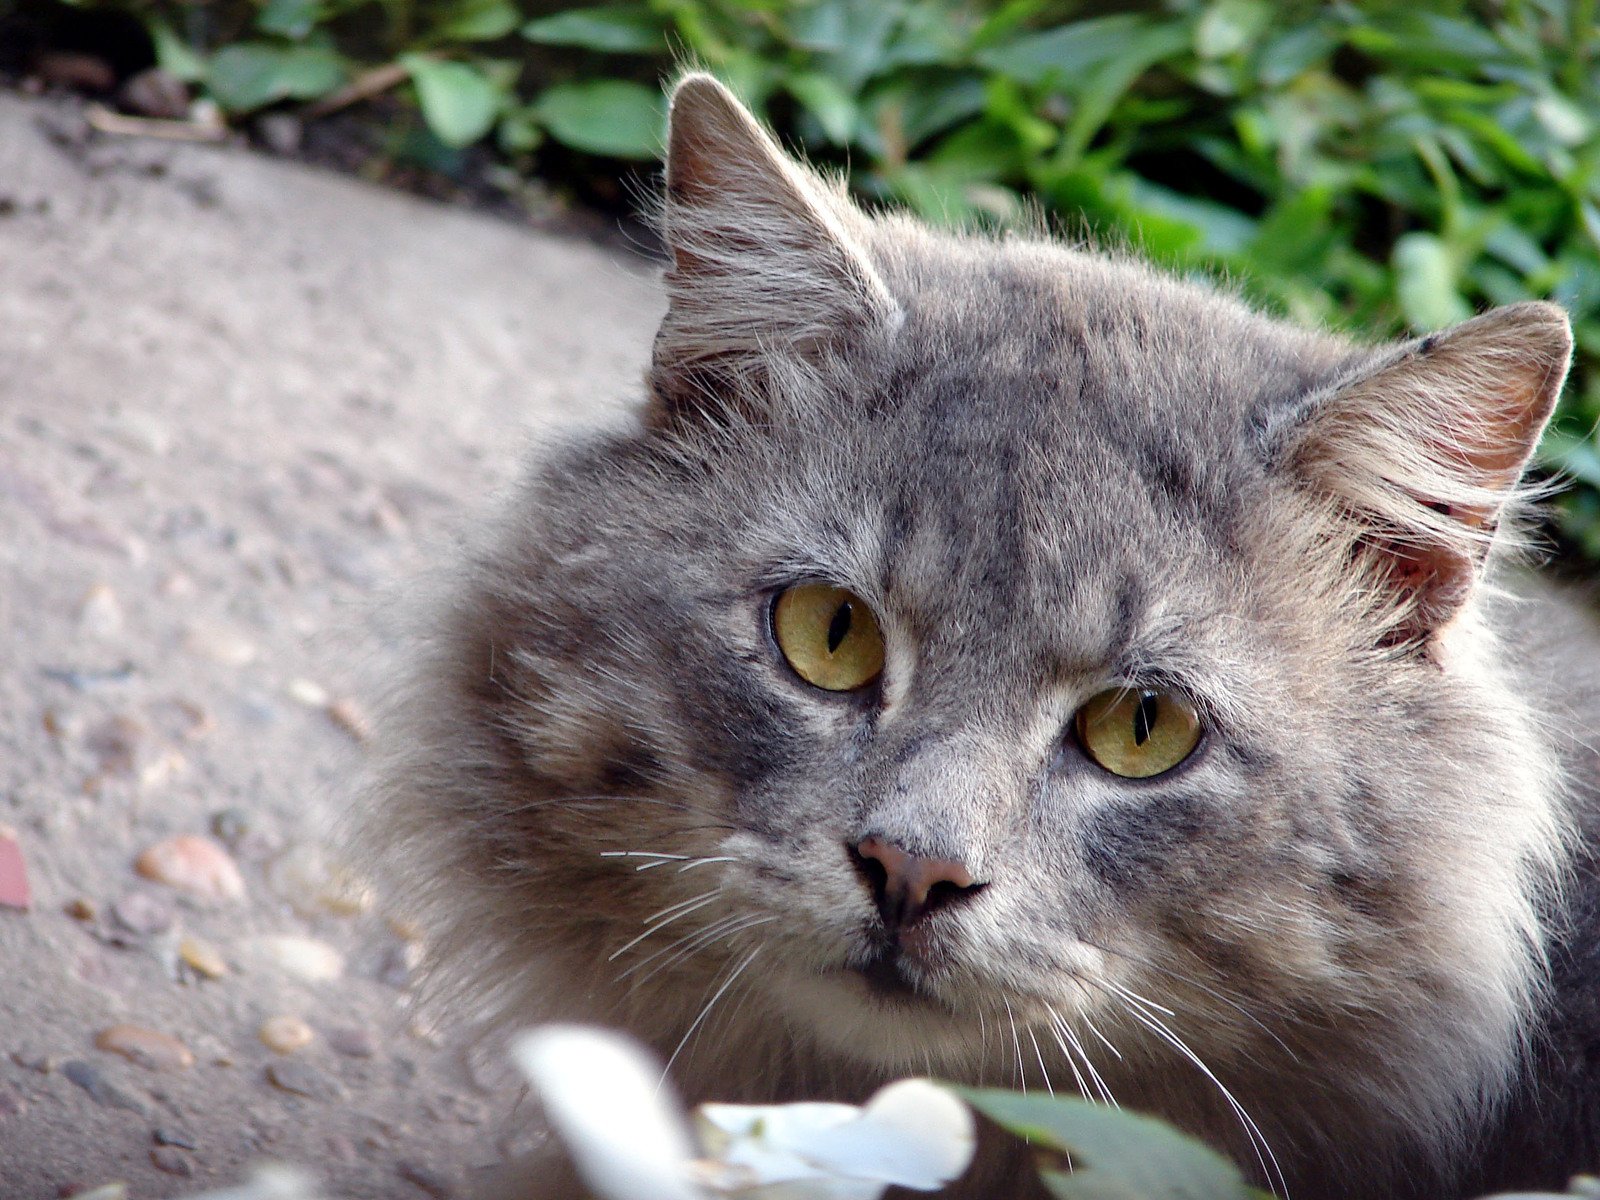 a close up image of a gray cat